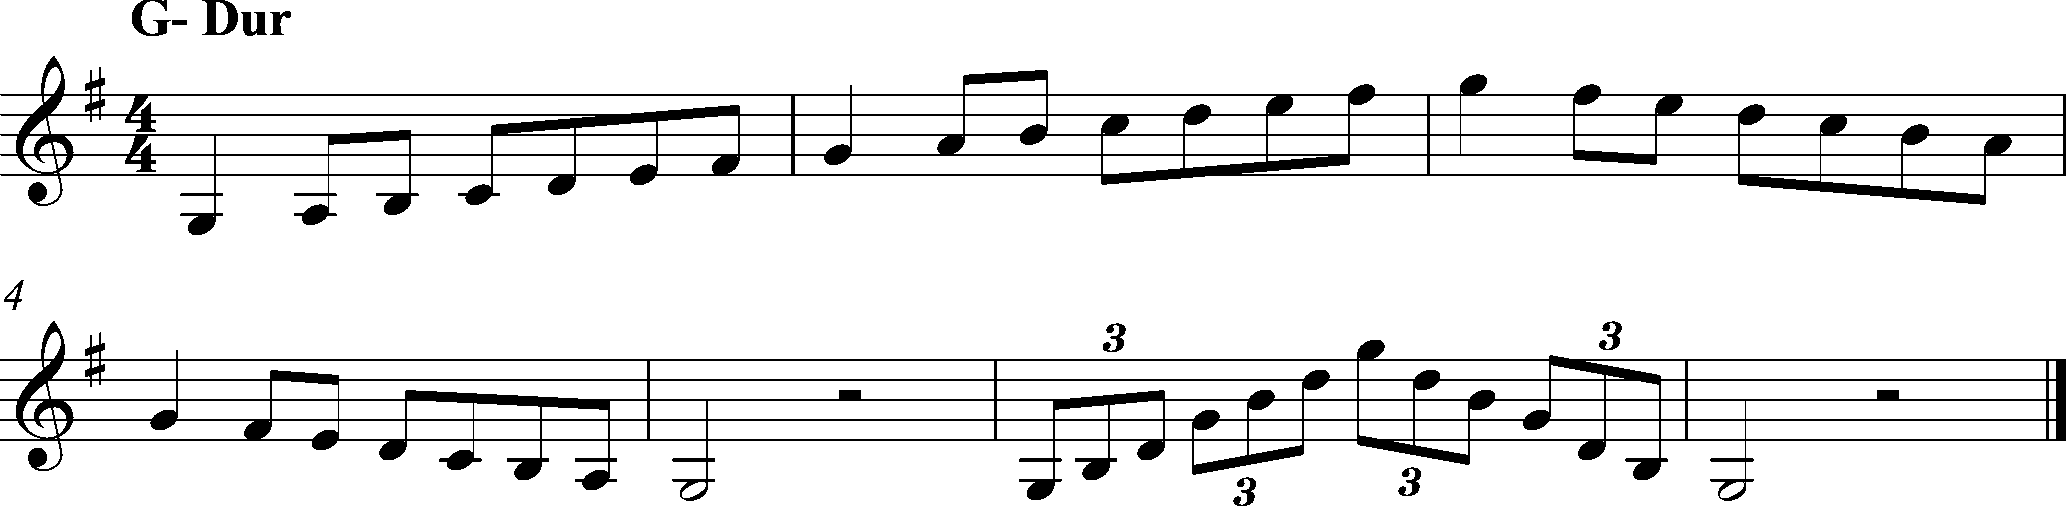 G-Dur, Tonleiter Klarinette